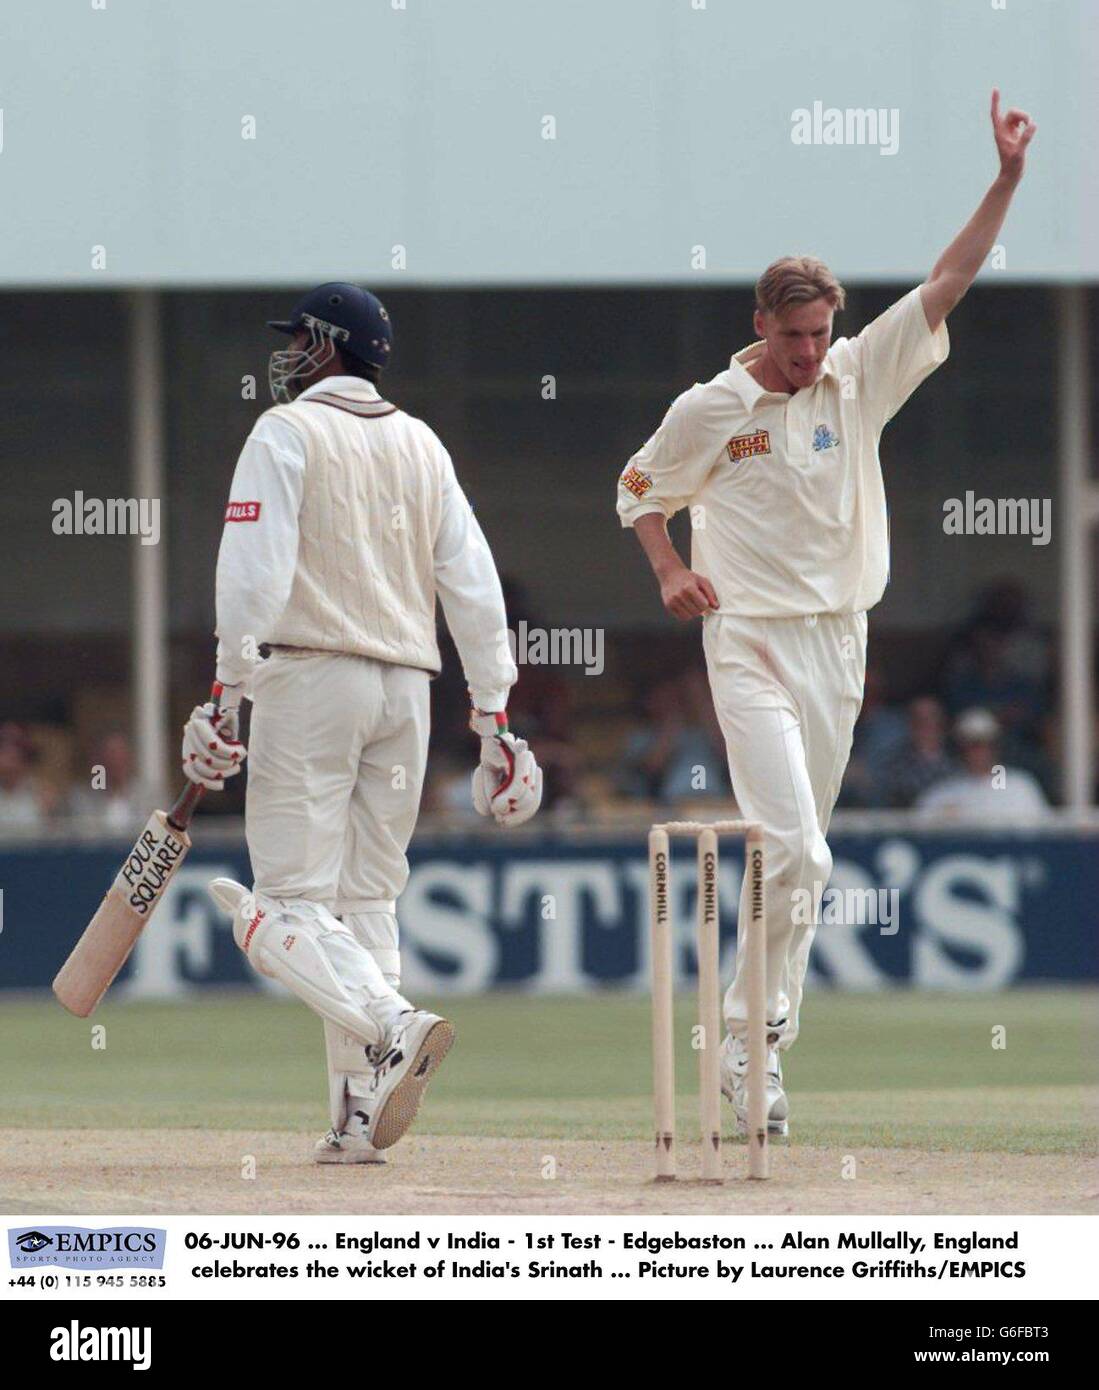 06-JUN-96, Angleterre v Inde - 1er test - Edgebaston, Alan Mullally, Angleterre célèbre la cricket de Srinath en Inde, photo de Laurence Griffiths/EMPICS Banque D'Images